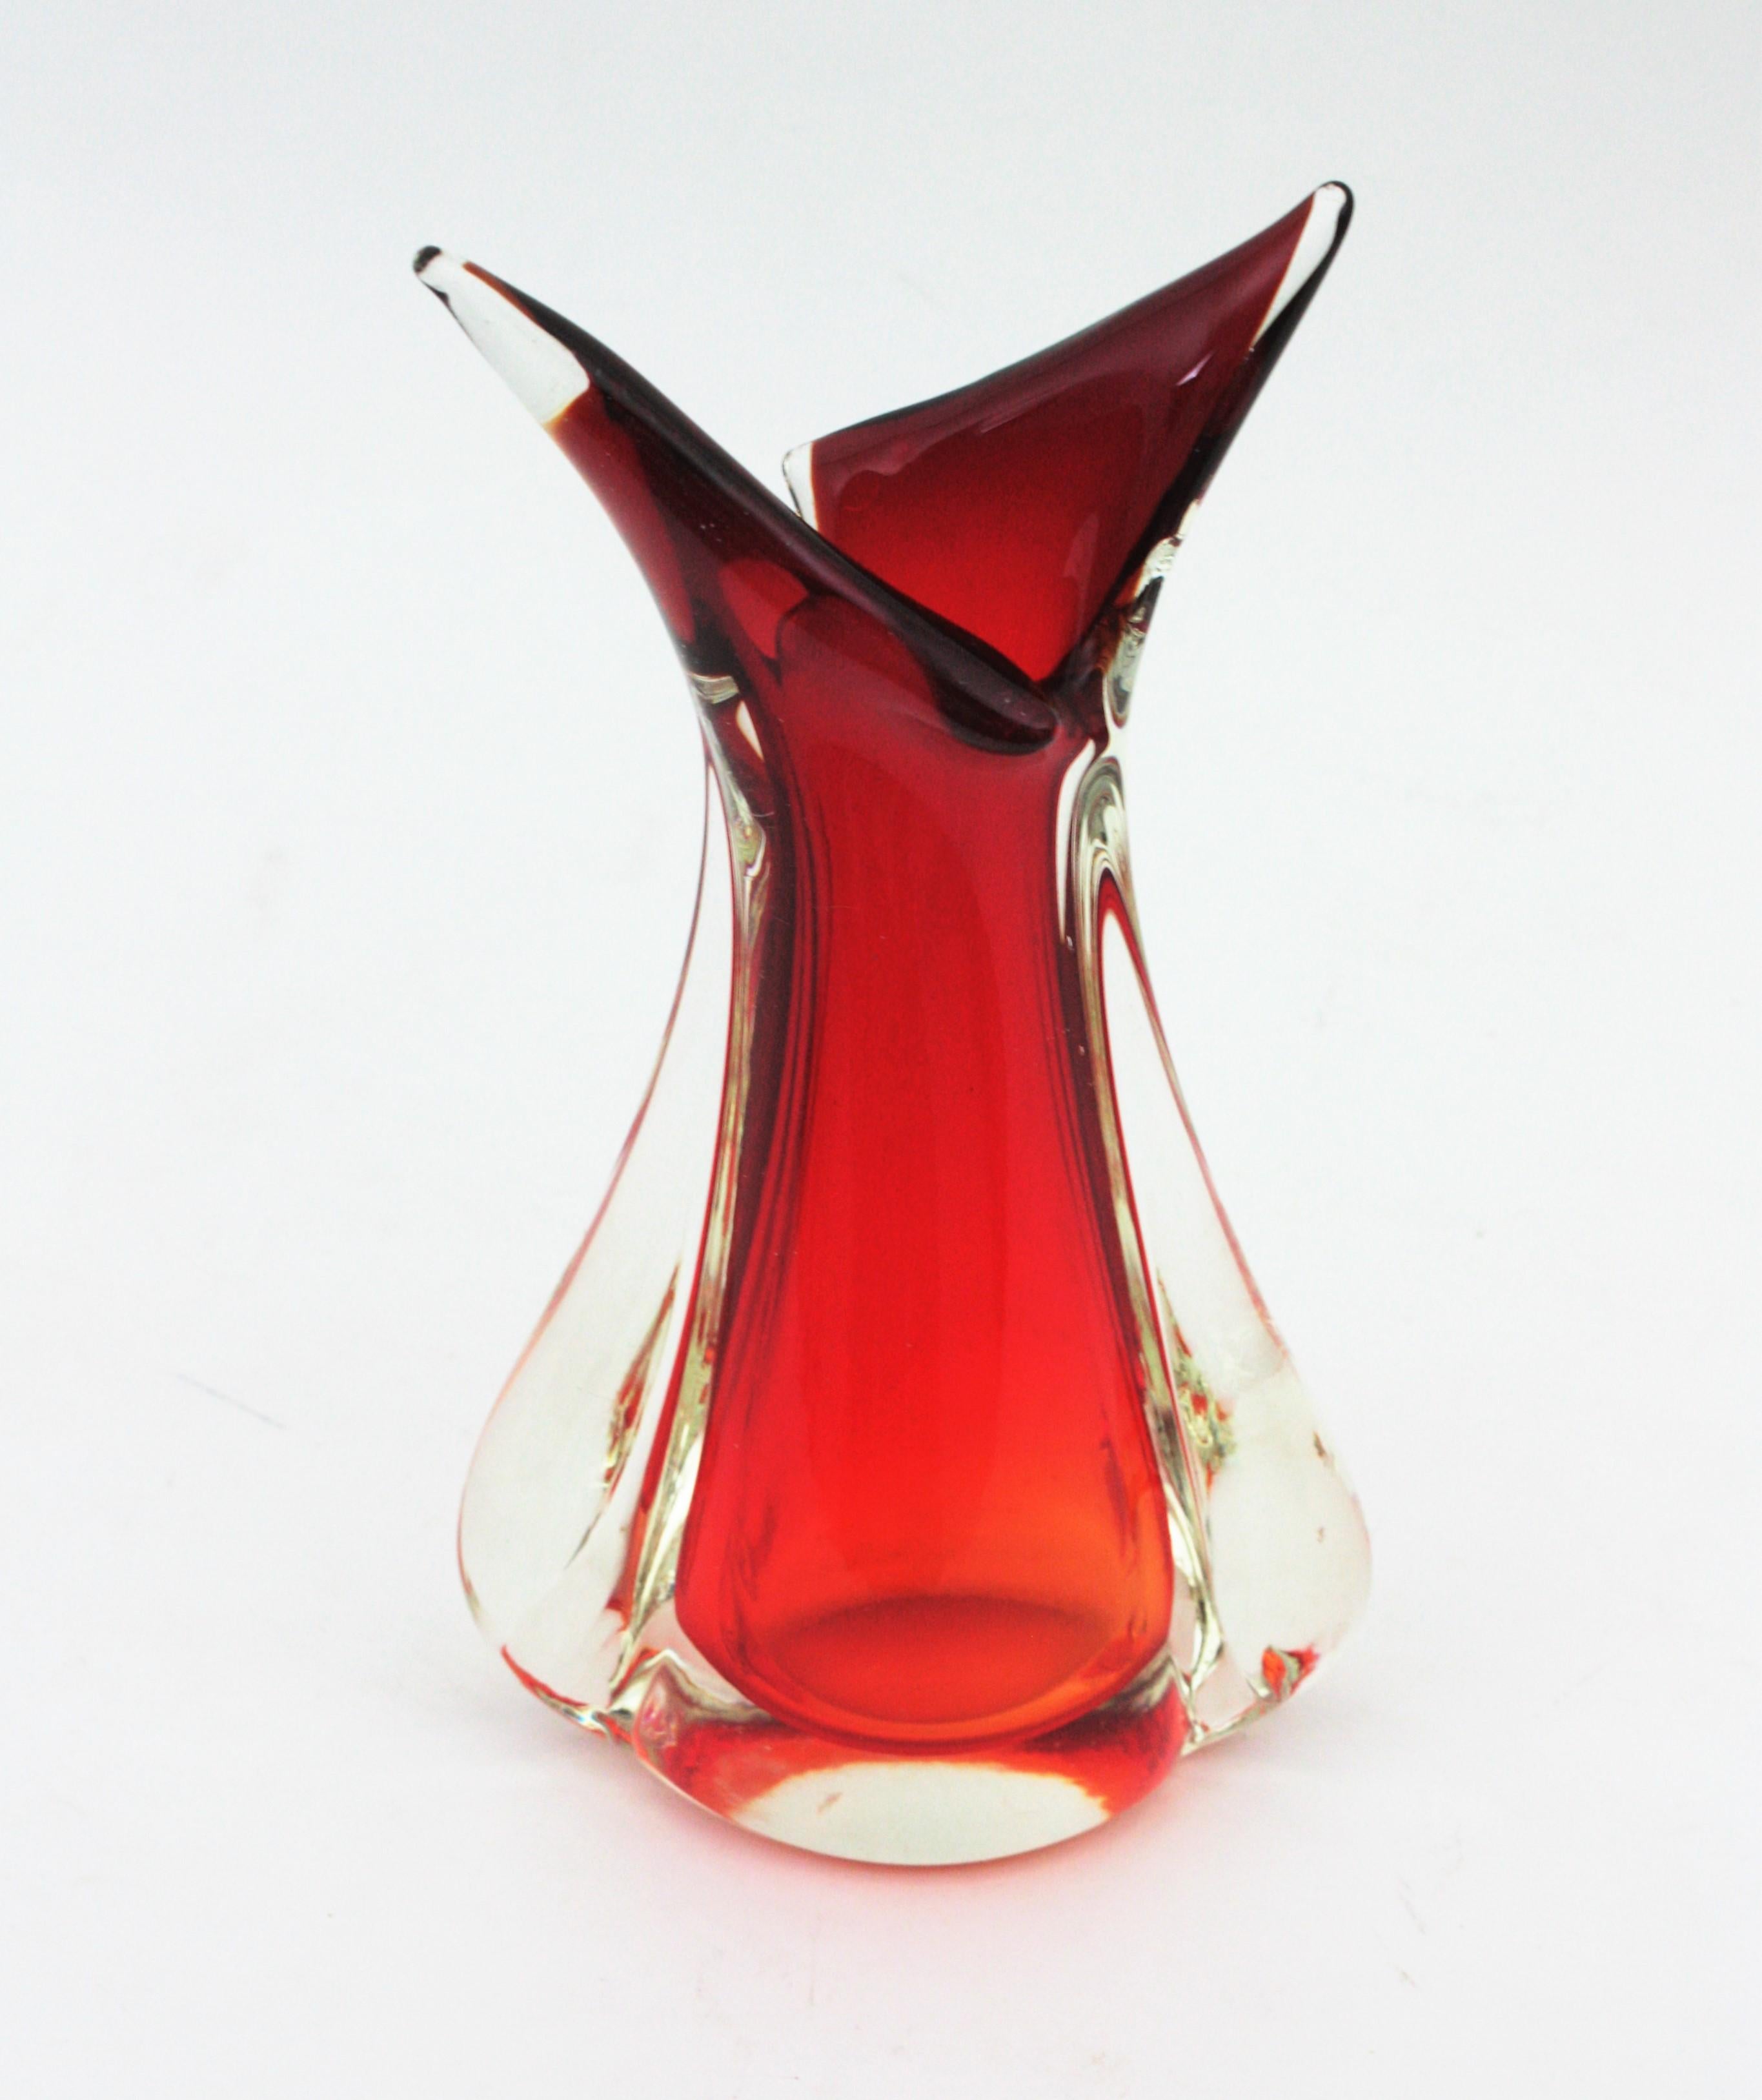 Hand-Crafted Flavio Poli Seguso Red Orange Sommerso Murano Art Glass Vase For Sale